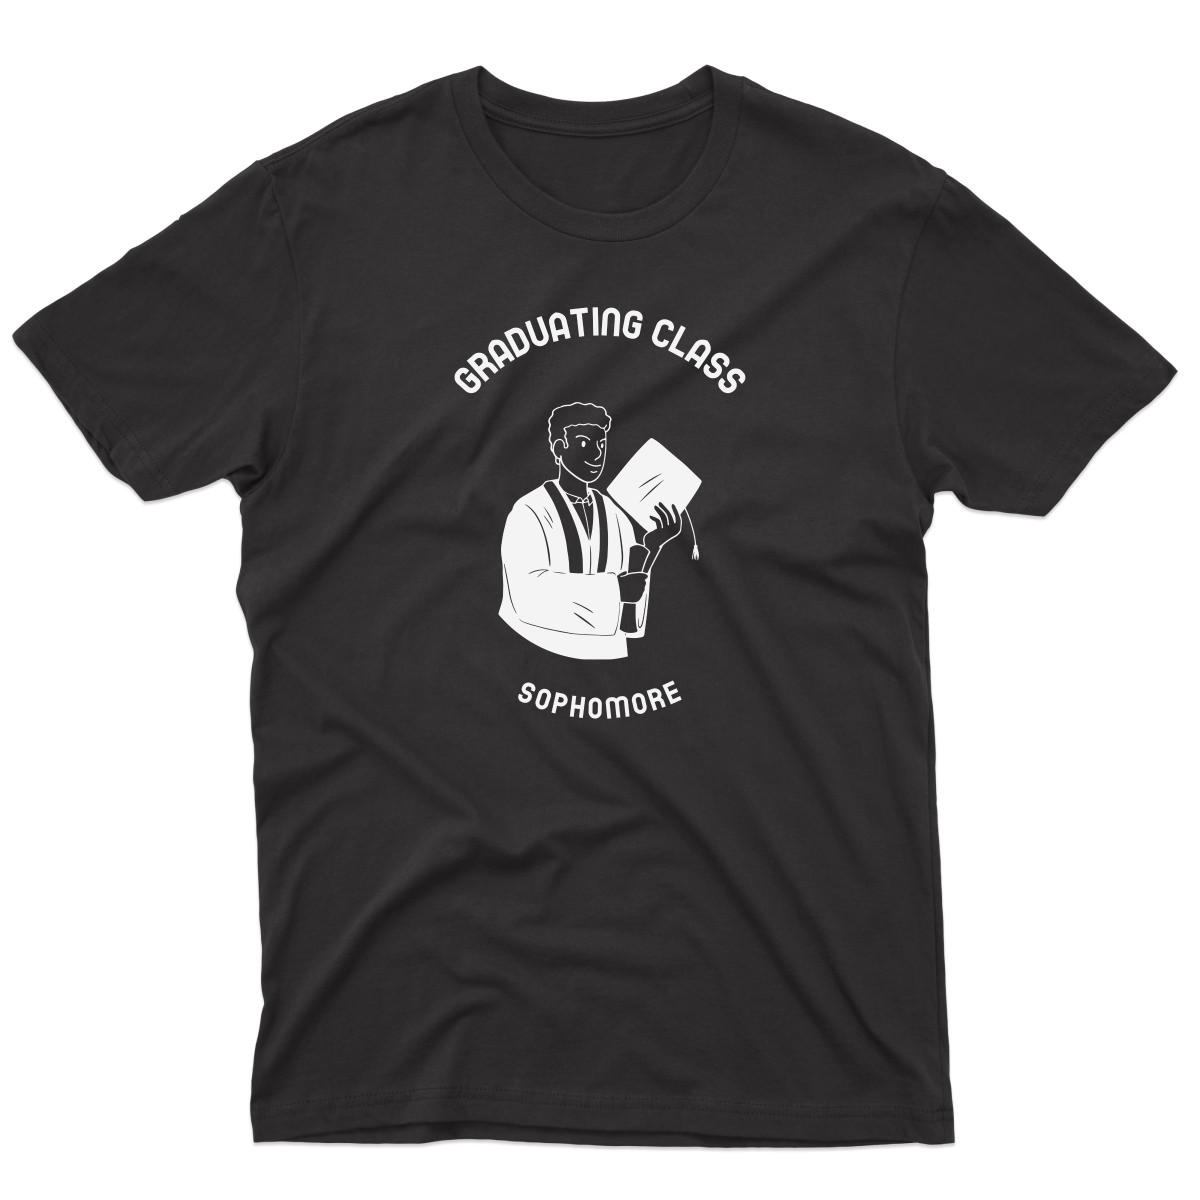 Graduating Class Sophomore Men's T-shirt | Black